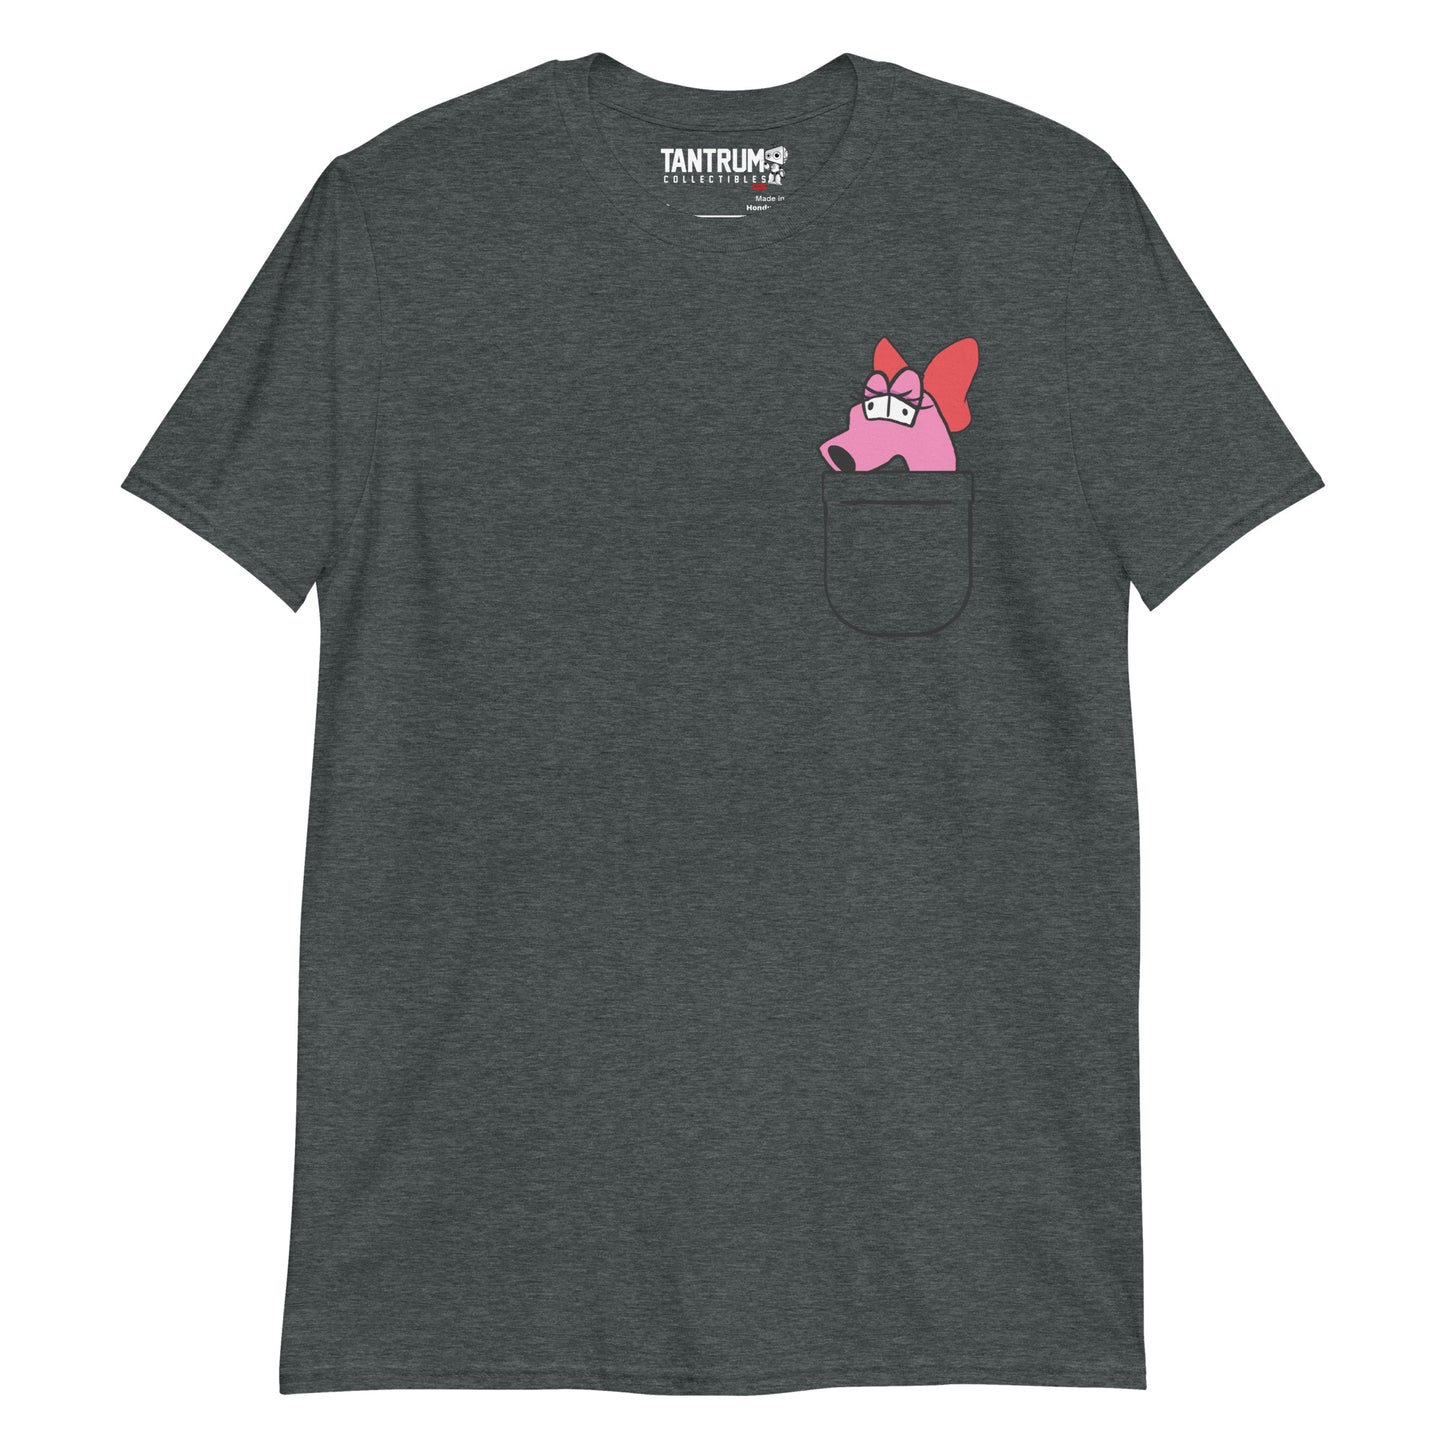 FinalFeentasy - Unisex T-Shirt - Printed Pocket (Series 1) Birdo (Streamer Purchase)